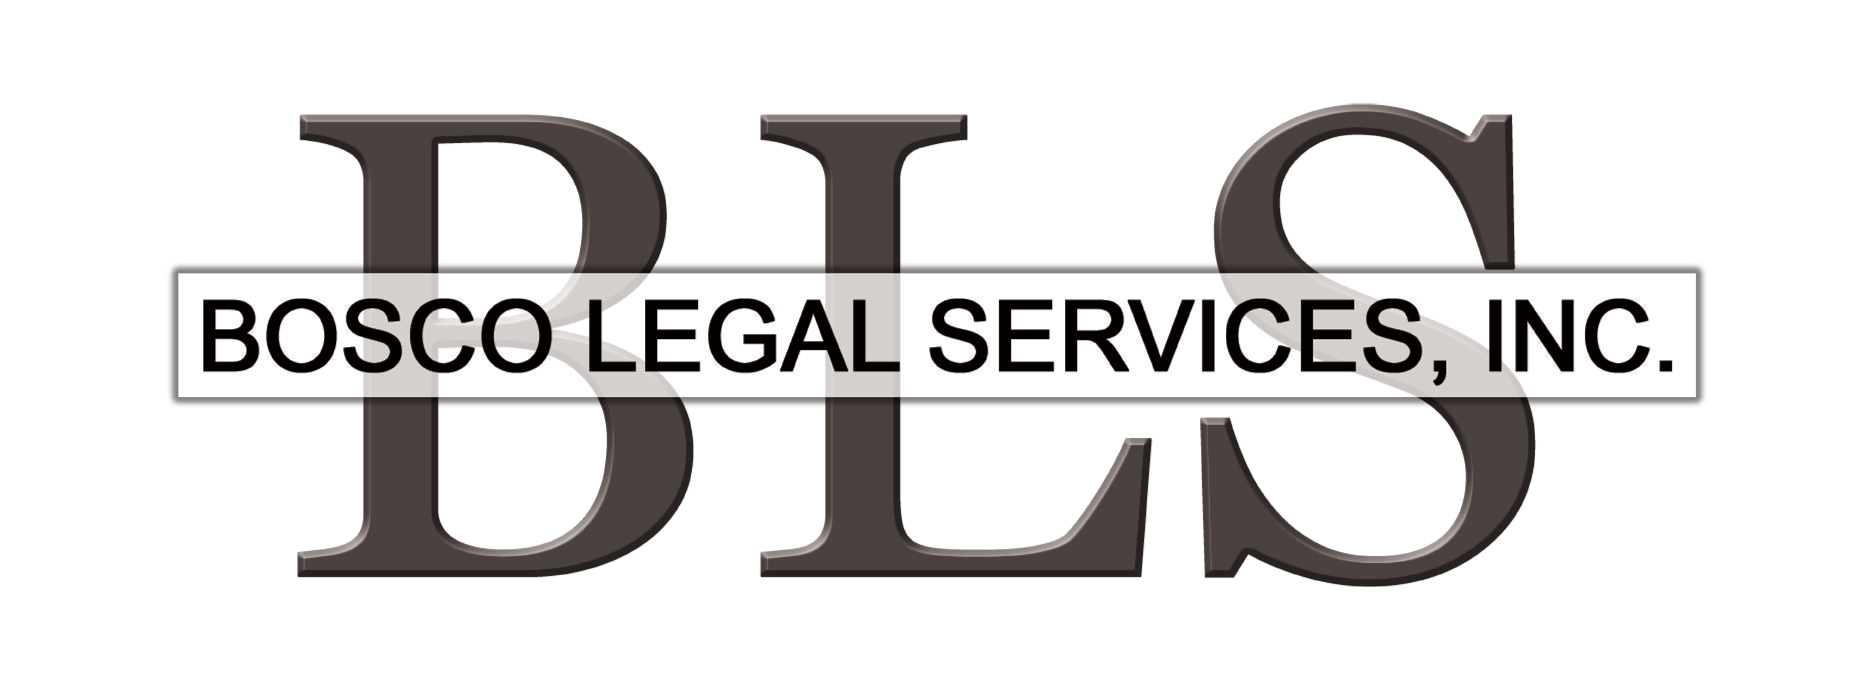 legal clipart legal service